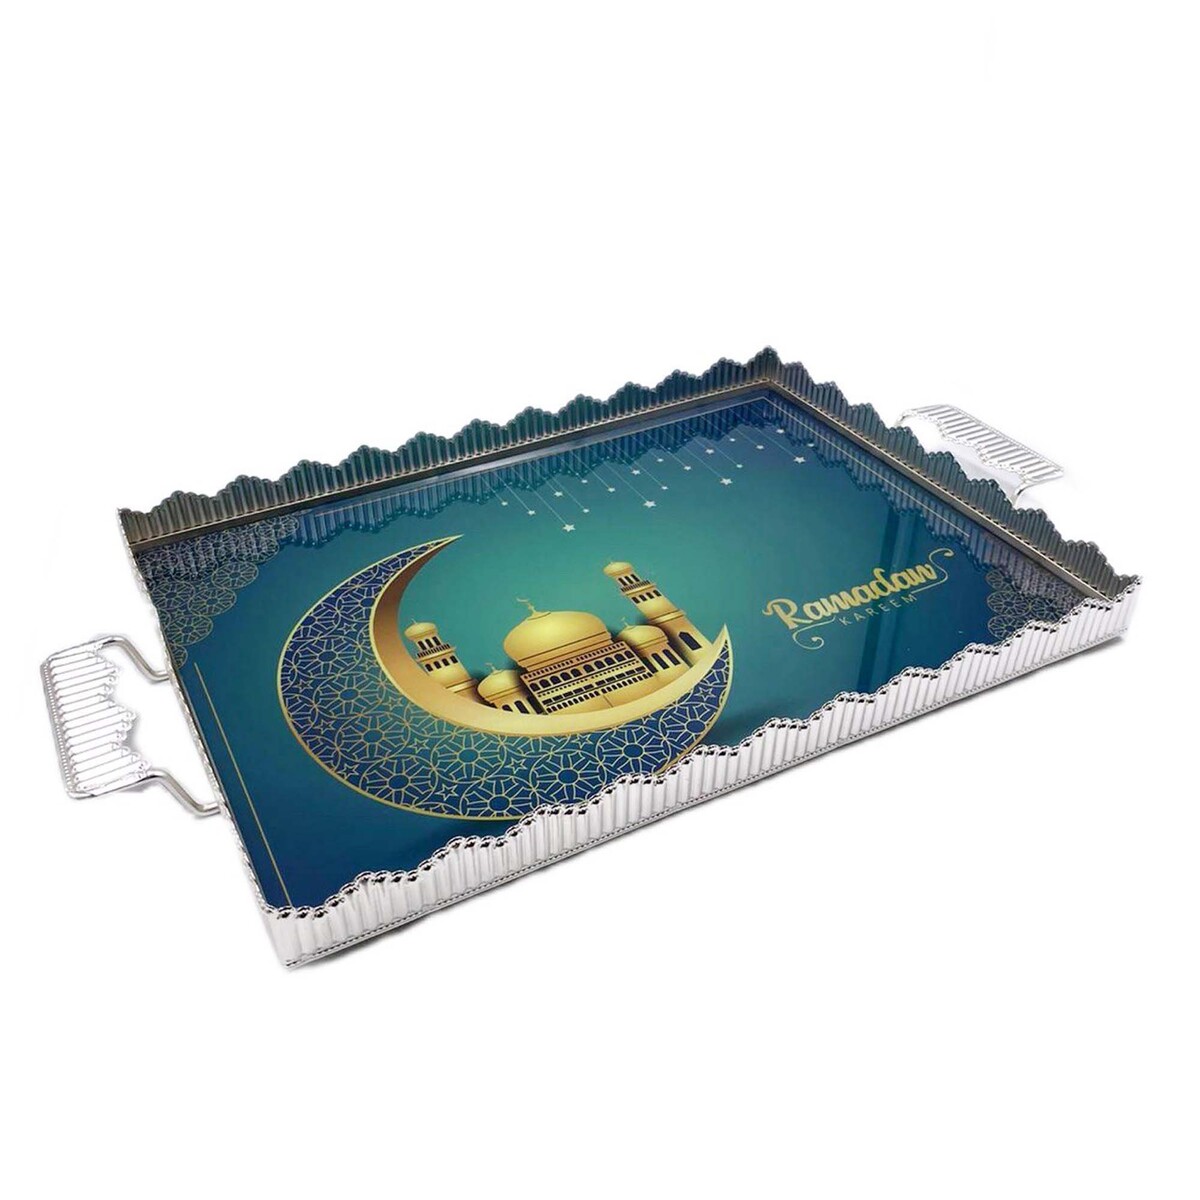 Helvacioglu Printed Serving Tray with Handles, 26 x 35 cm, Green, TK0281S  Online at Best Price, Arabic Ranges